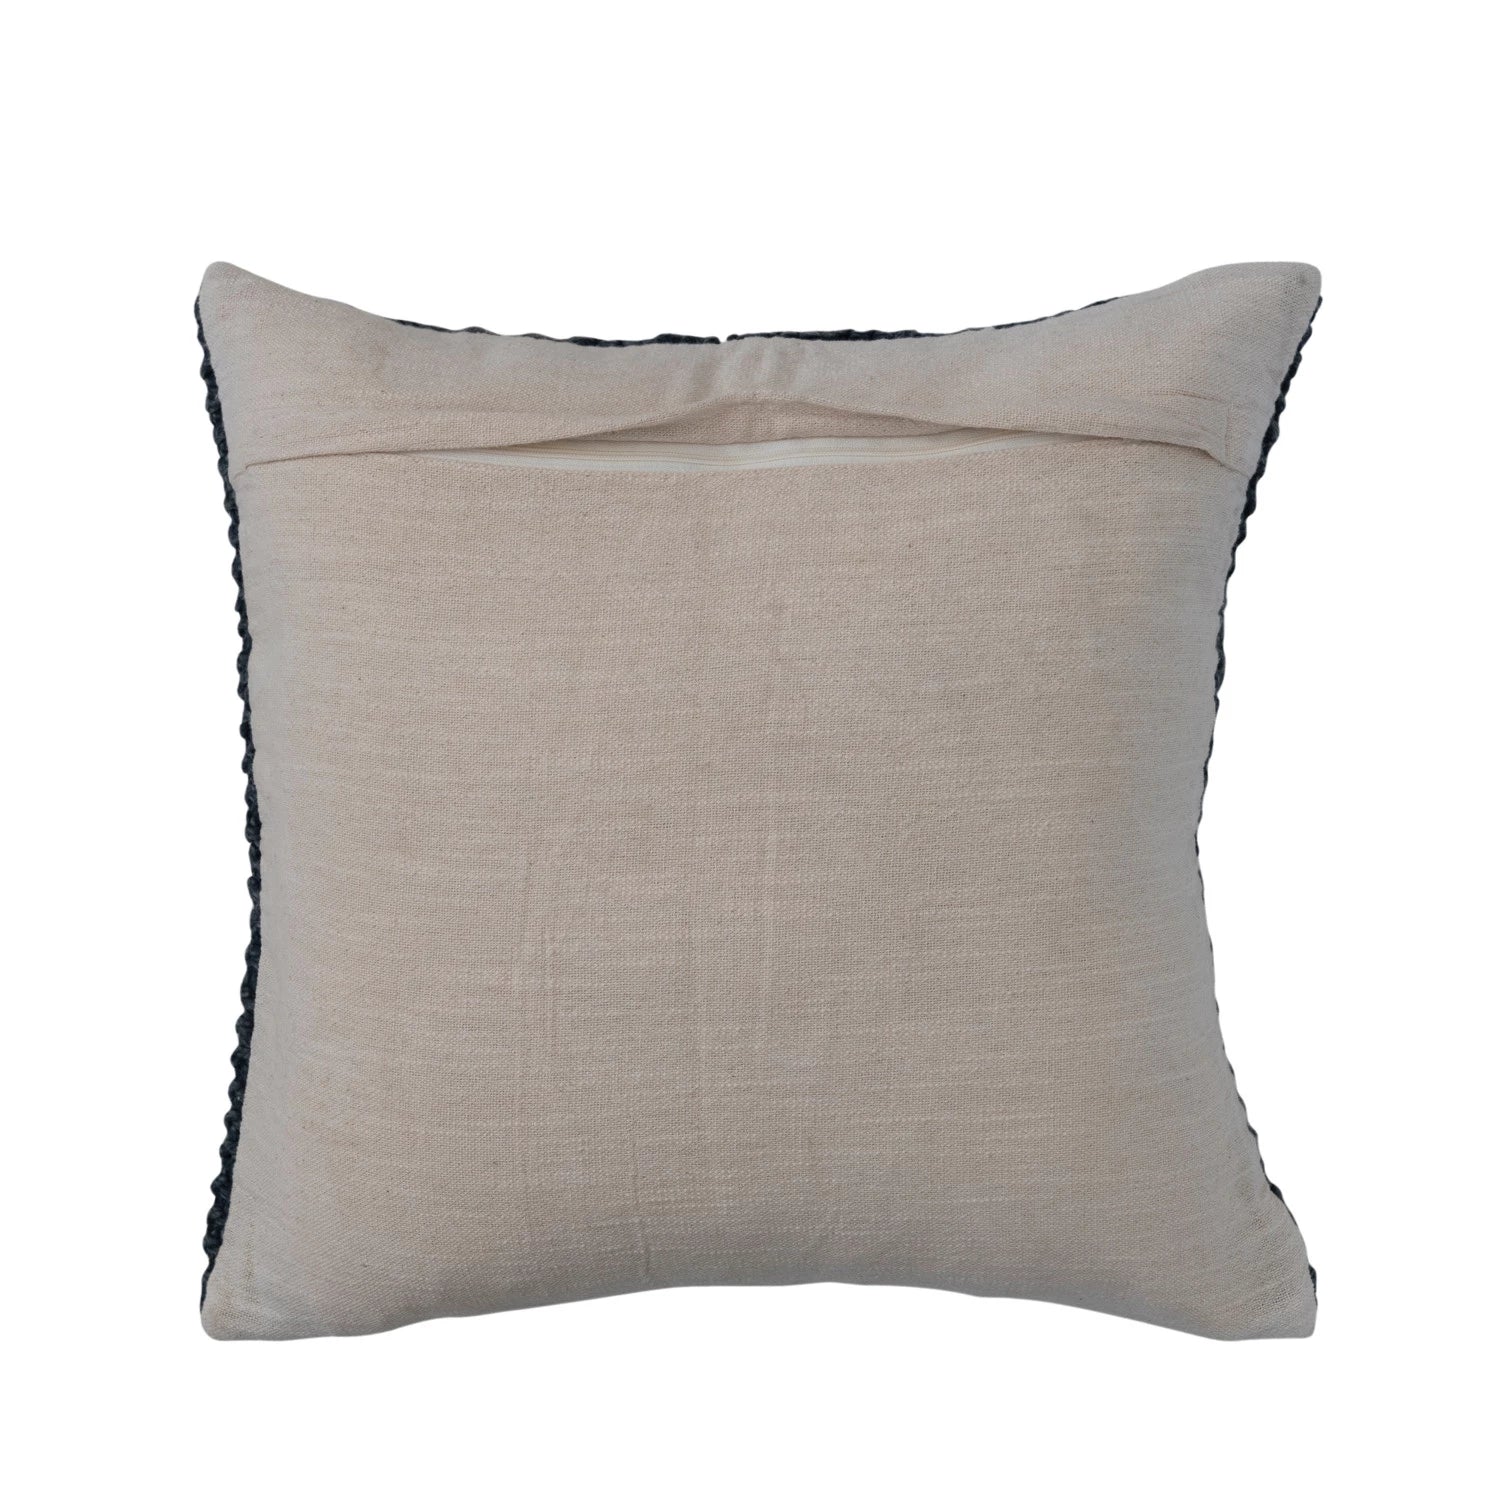 Blue Woven Cotton Cable Knit Pillow w/ Pattern